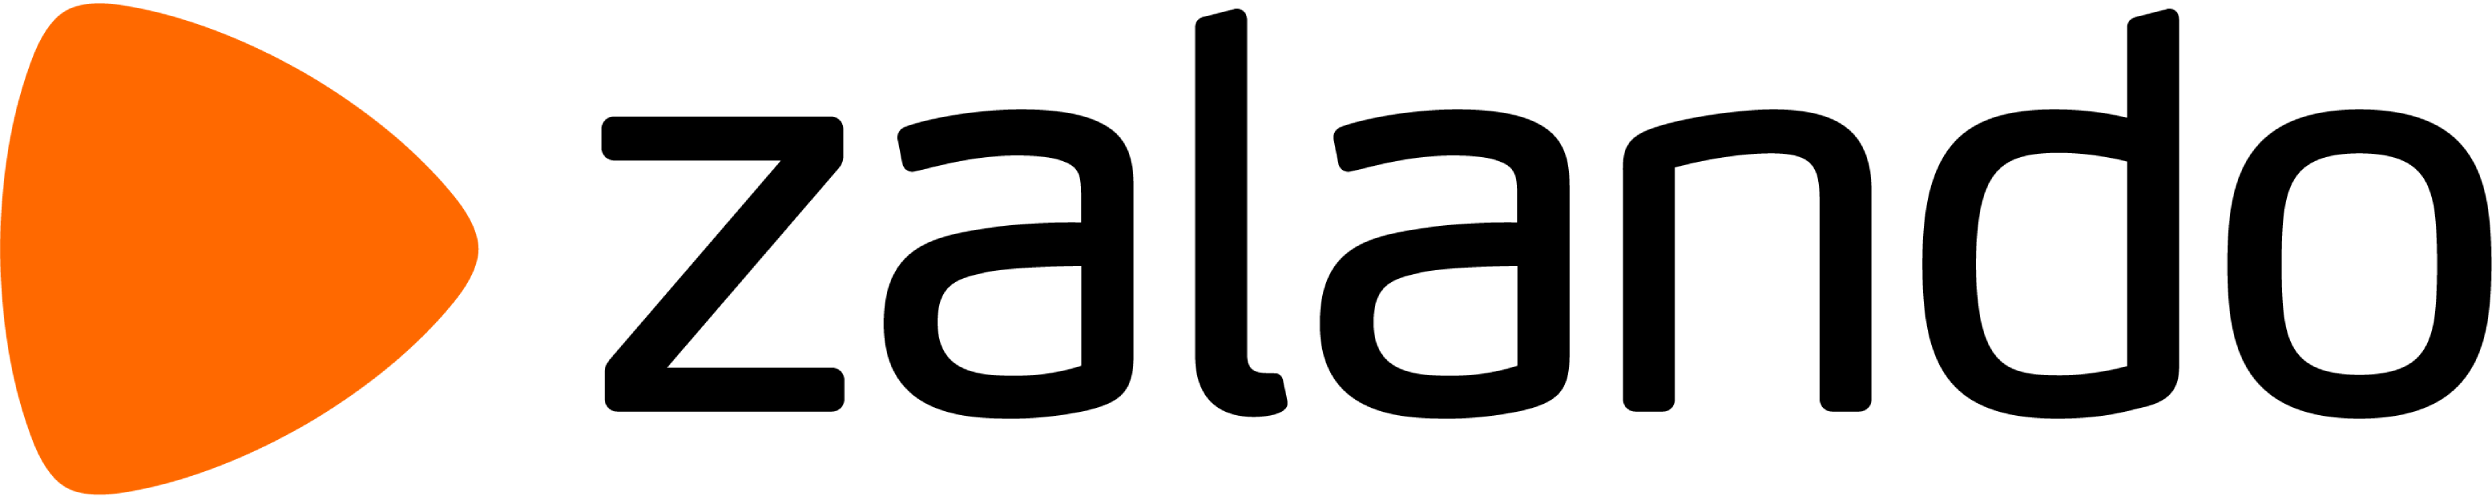 Zalando-SE-logo